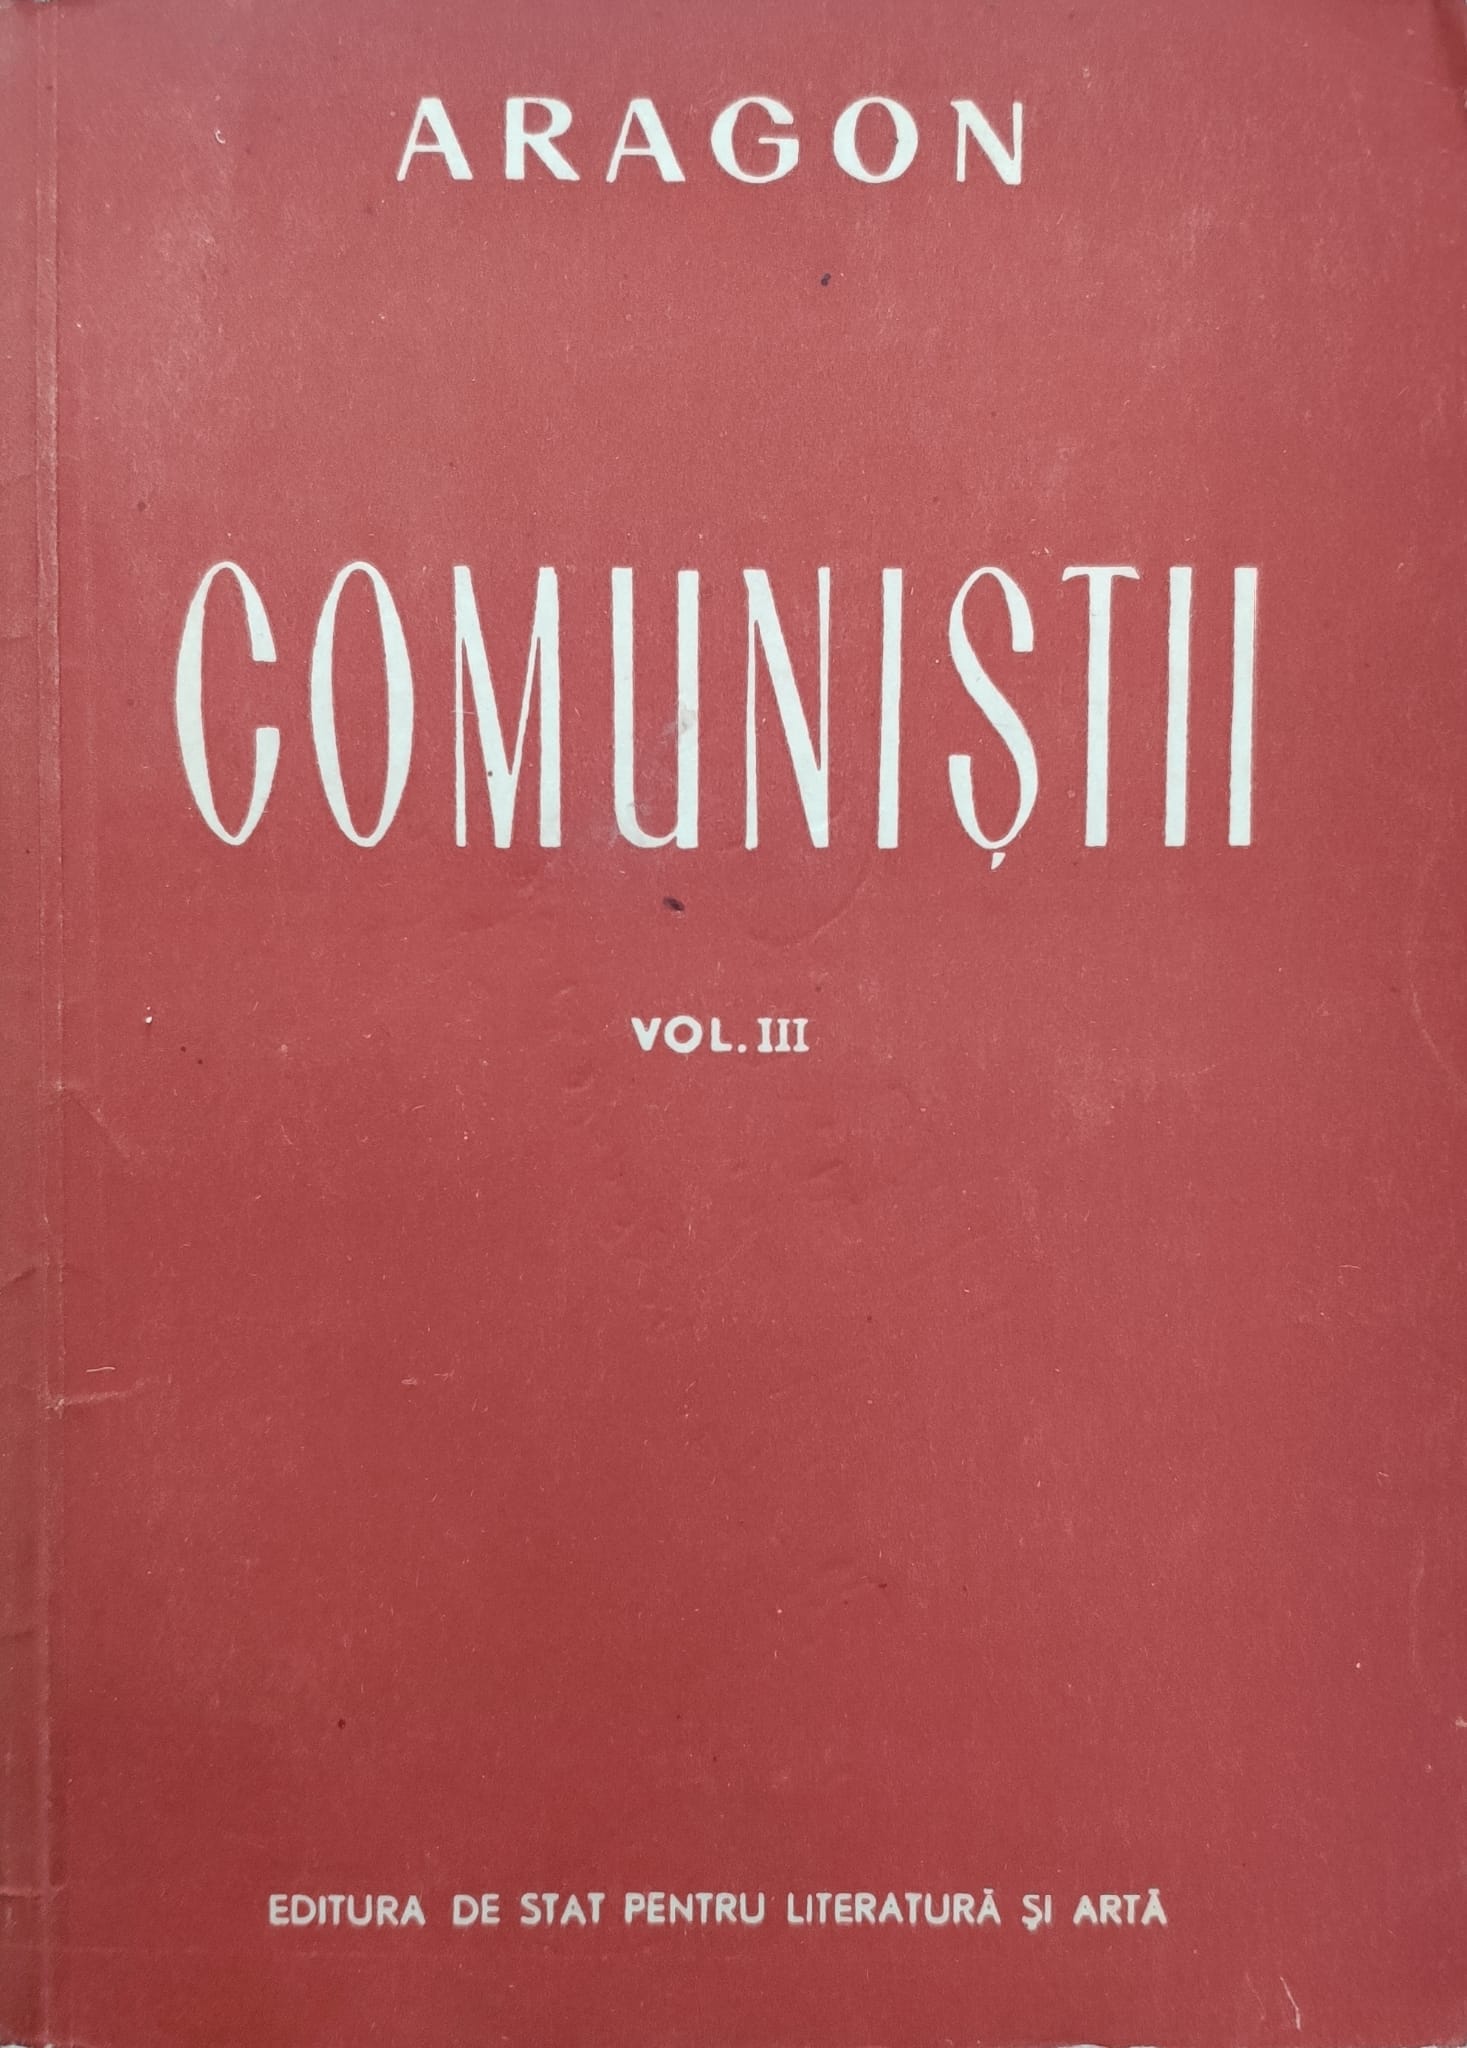 comunistii vol.3                                                                                     aragon                                                                                              